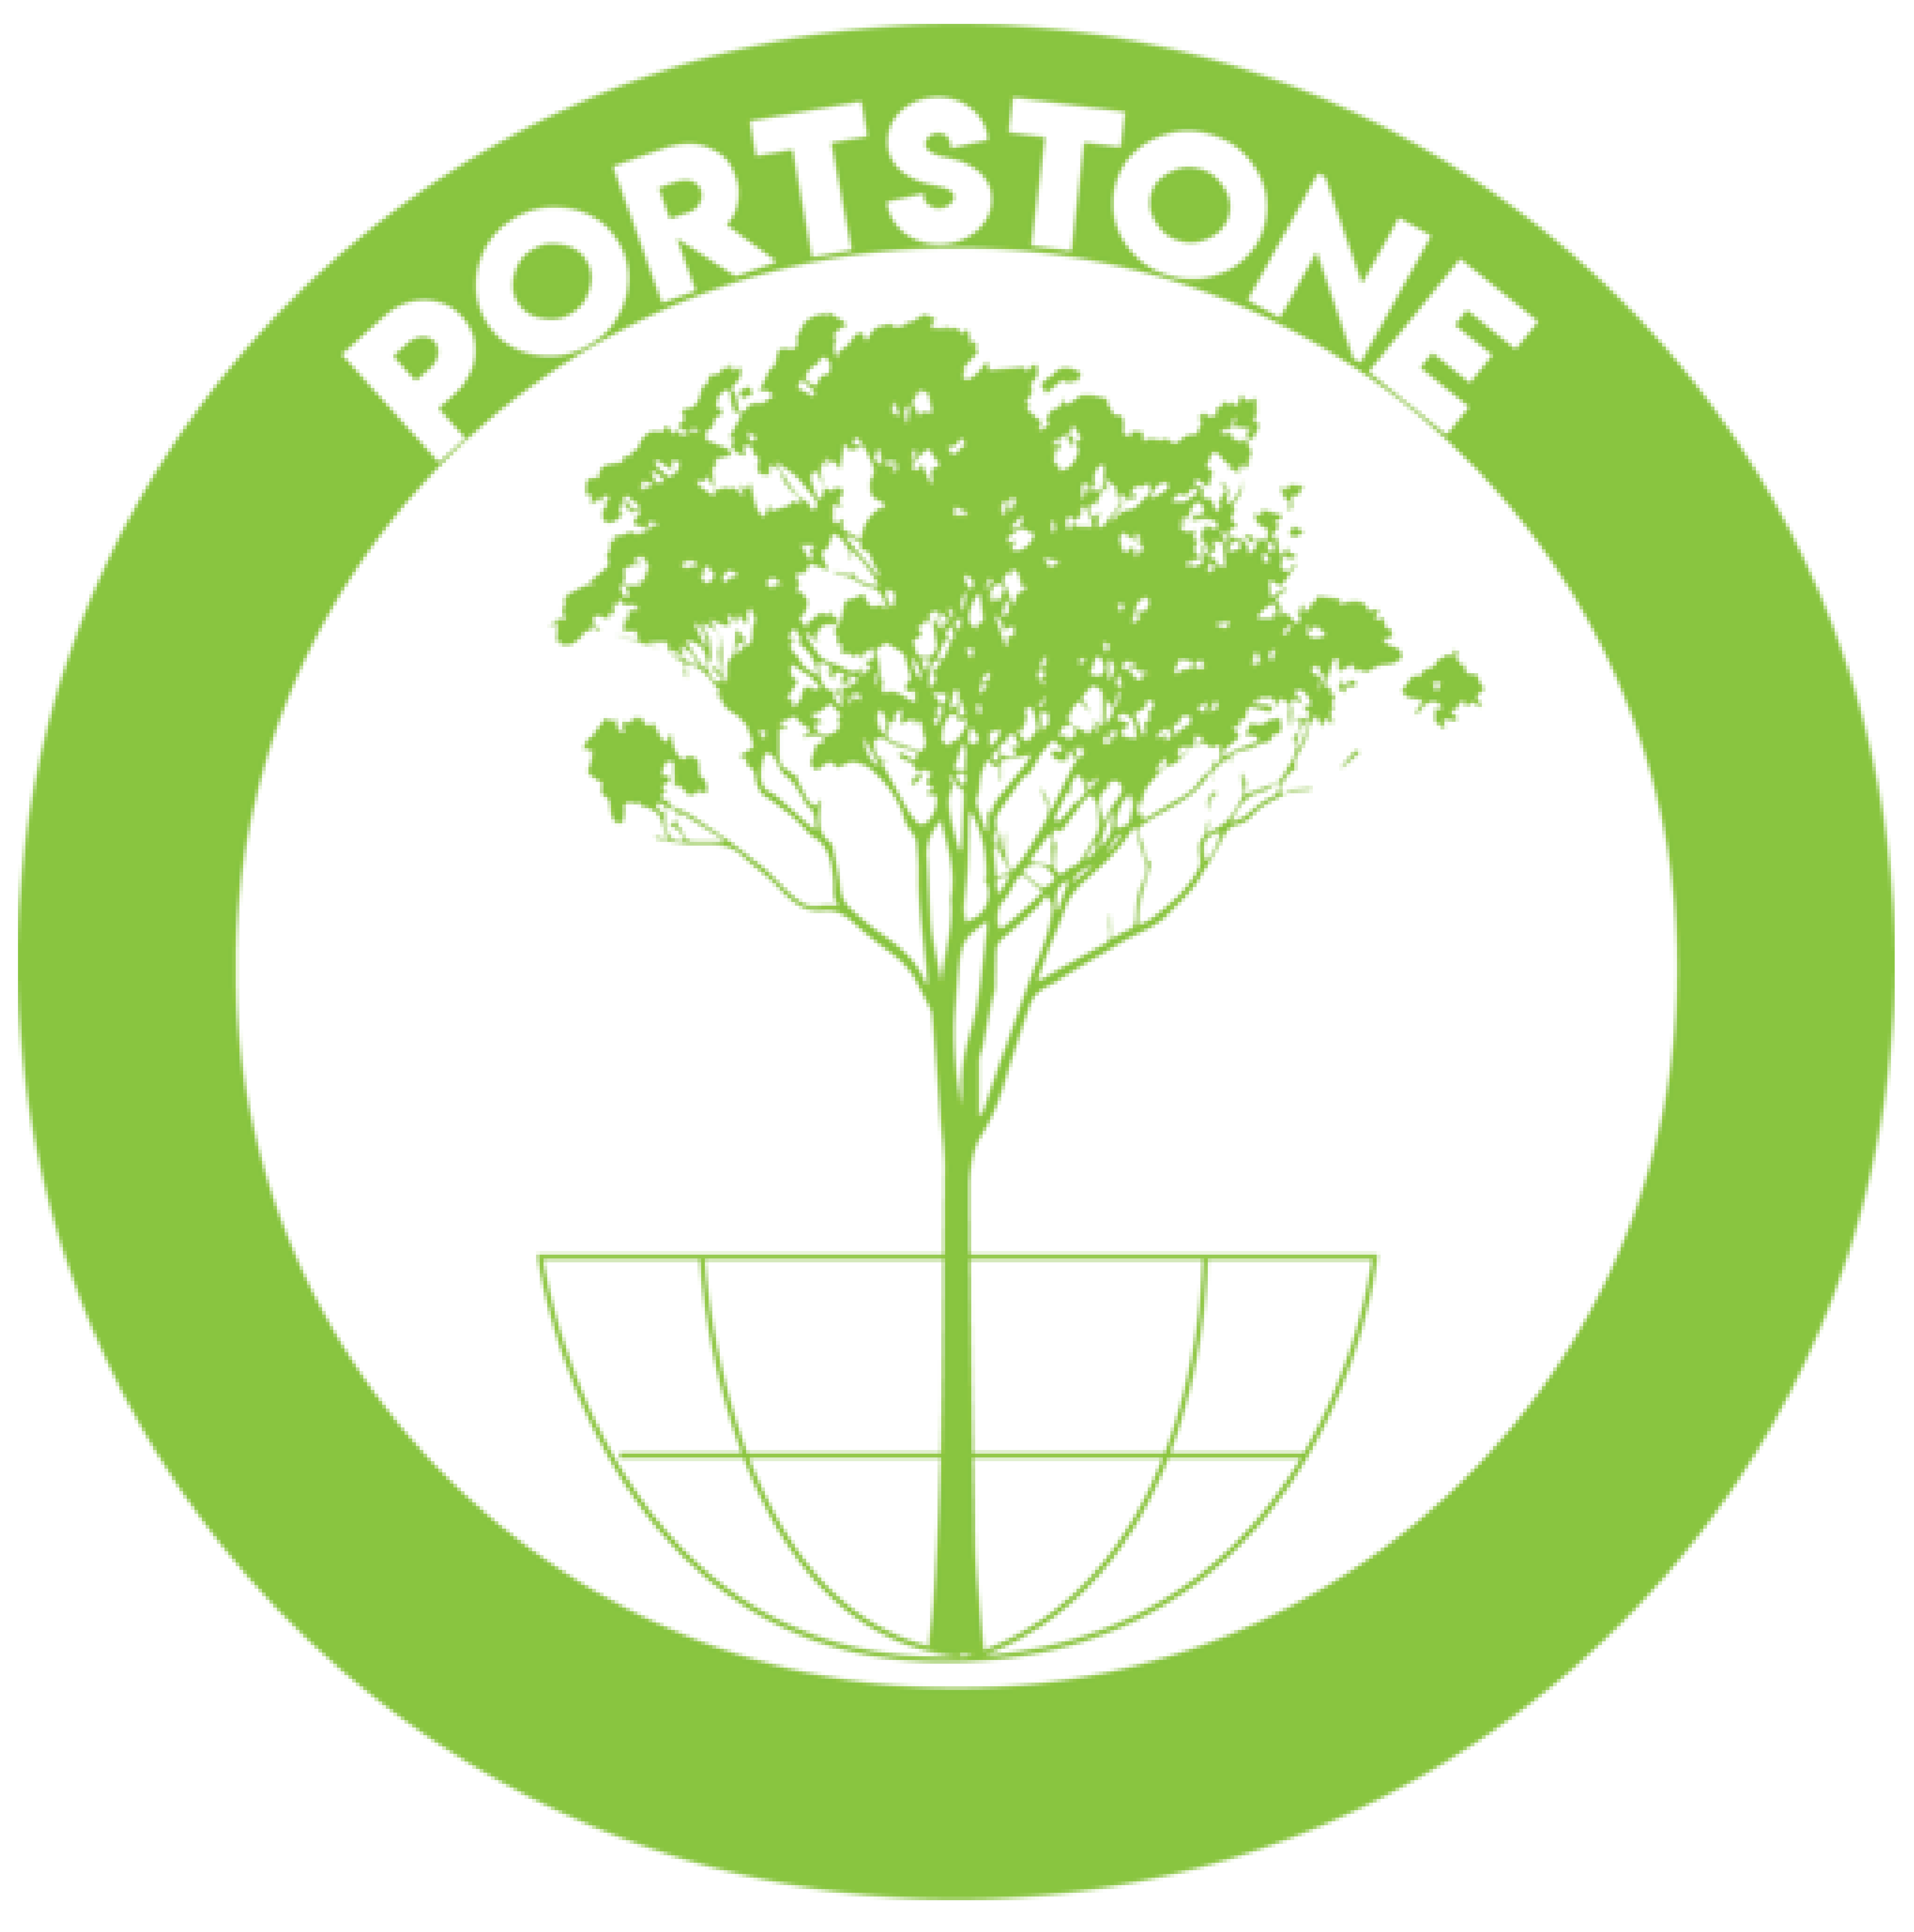 Portstone Garden Centre